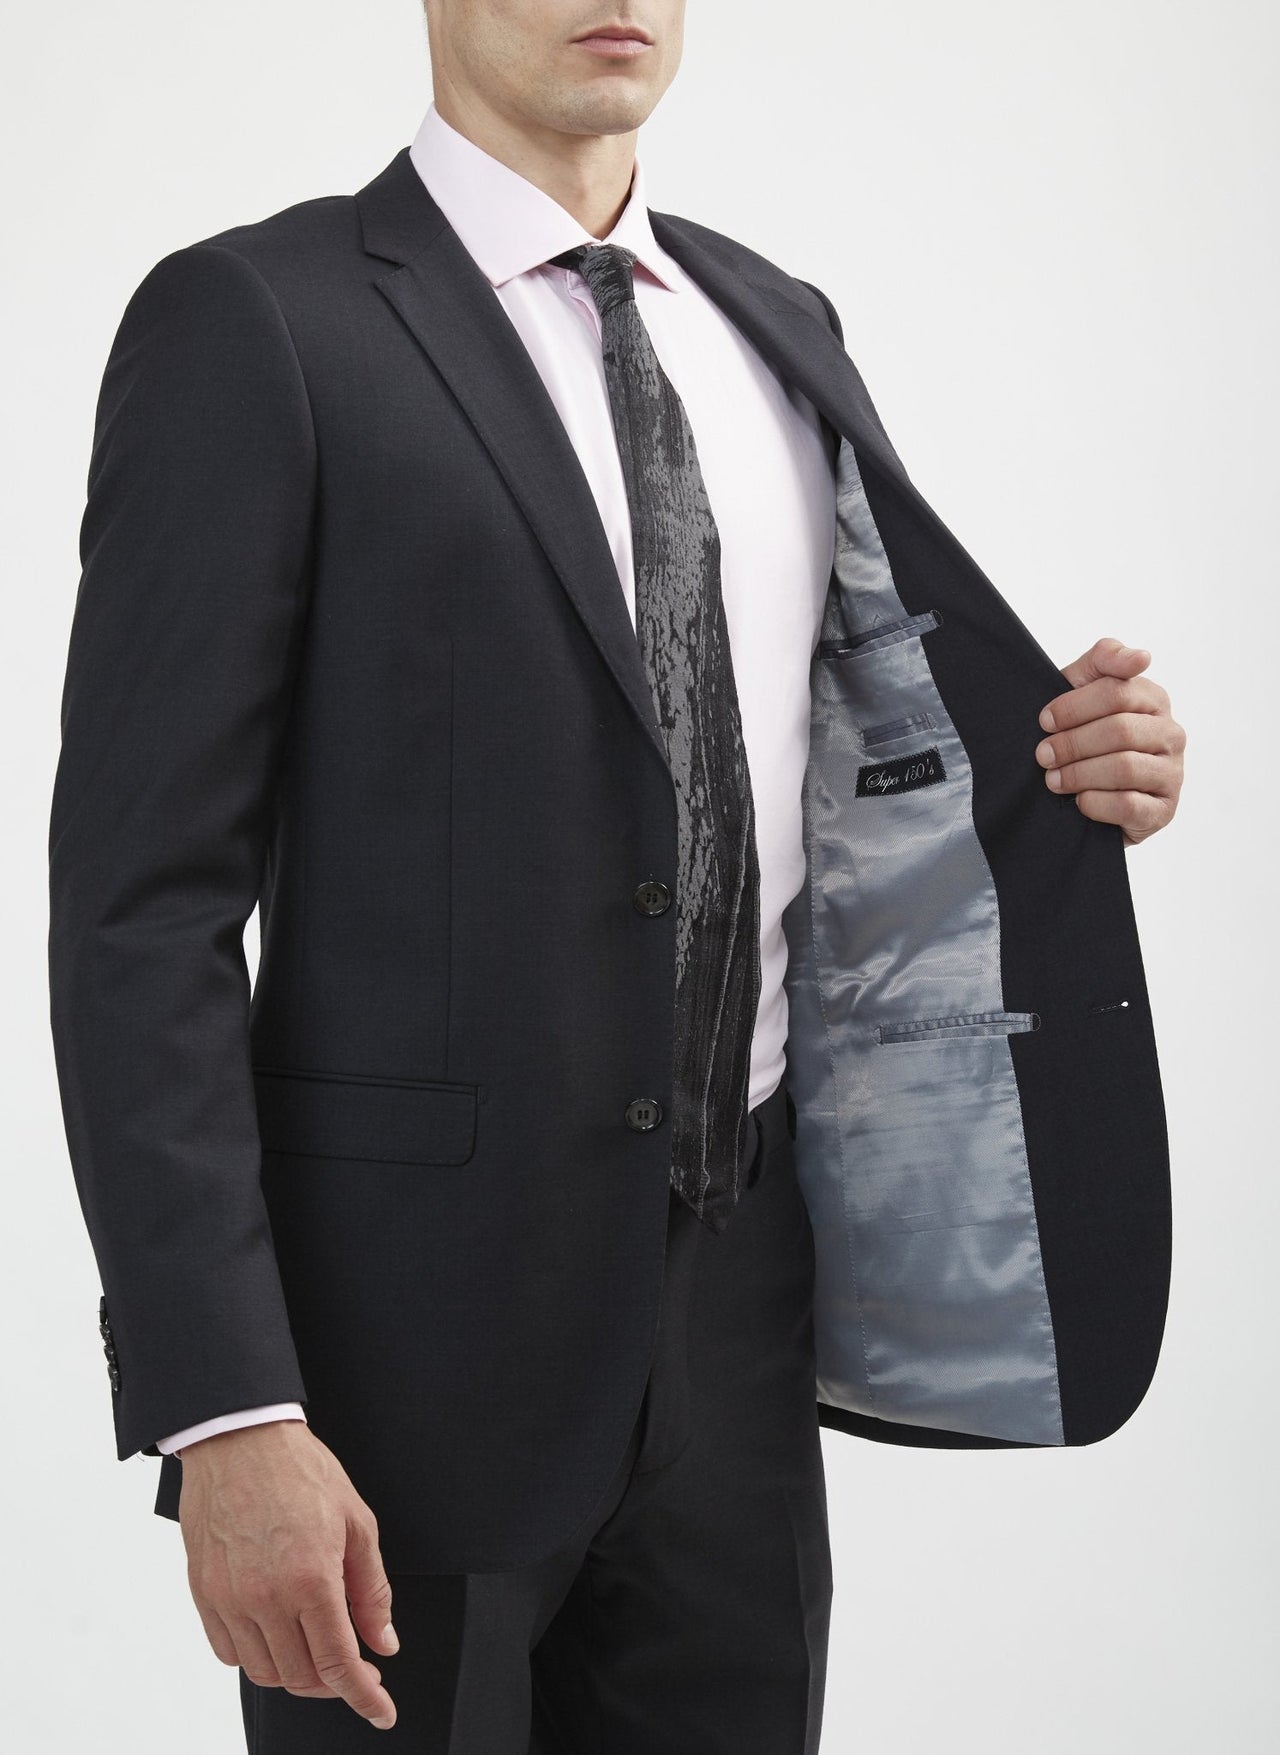 Luxurious 100% Super Fine Italian Wool Charcoal Grey Suit